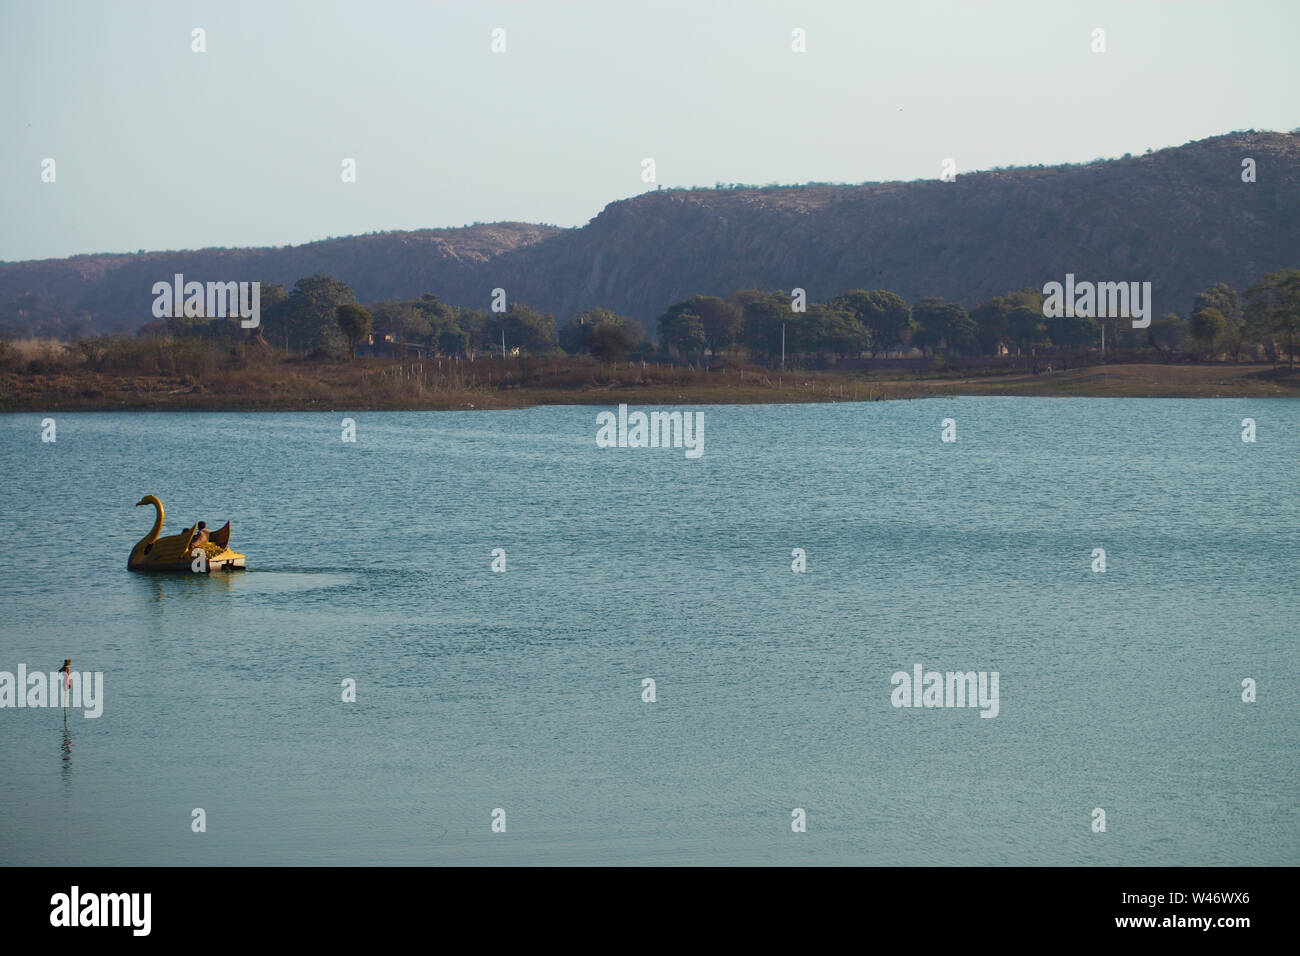 Boat in the lake, Damdama Lake, Sohna, Gurgaon, Haryana, India Stock Photo